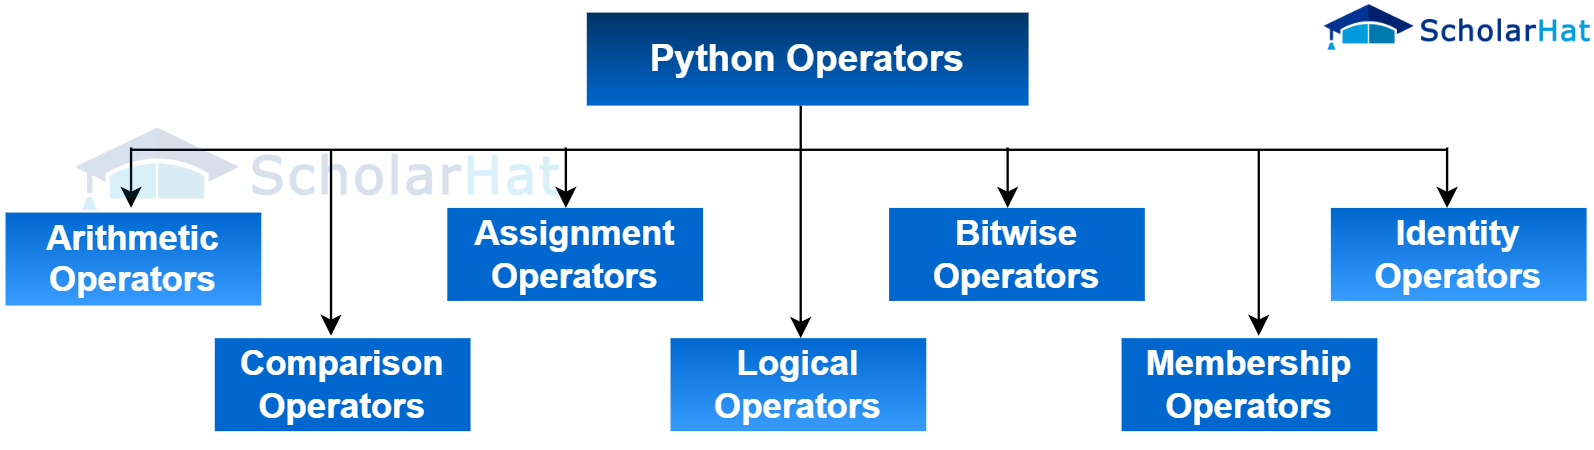 Types of Python Operators